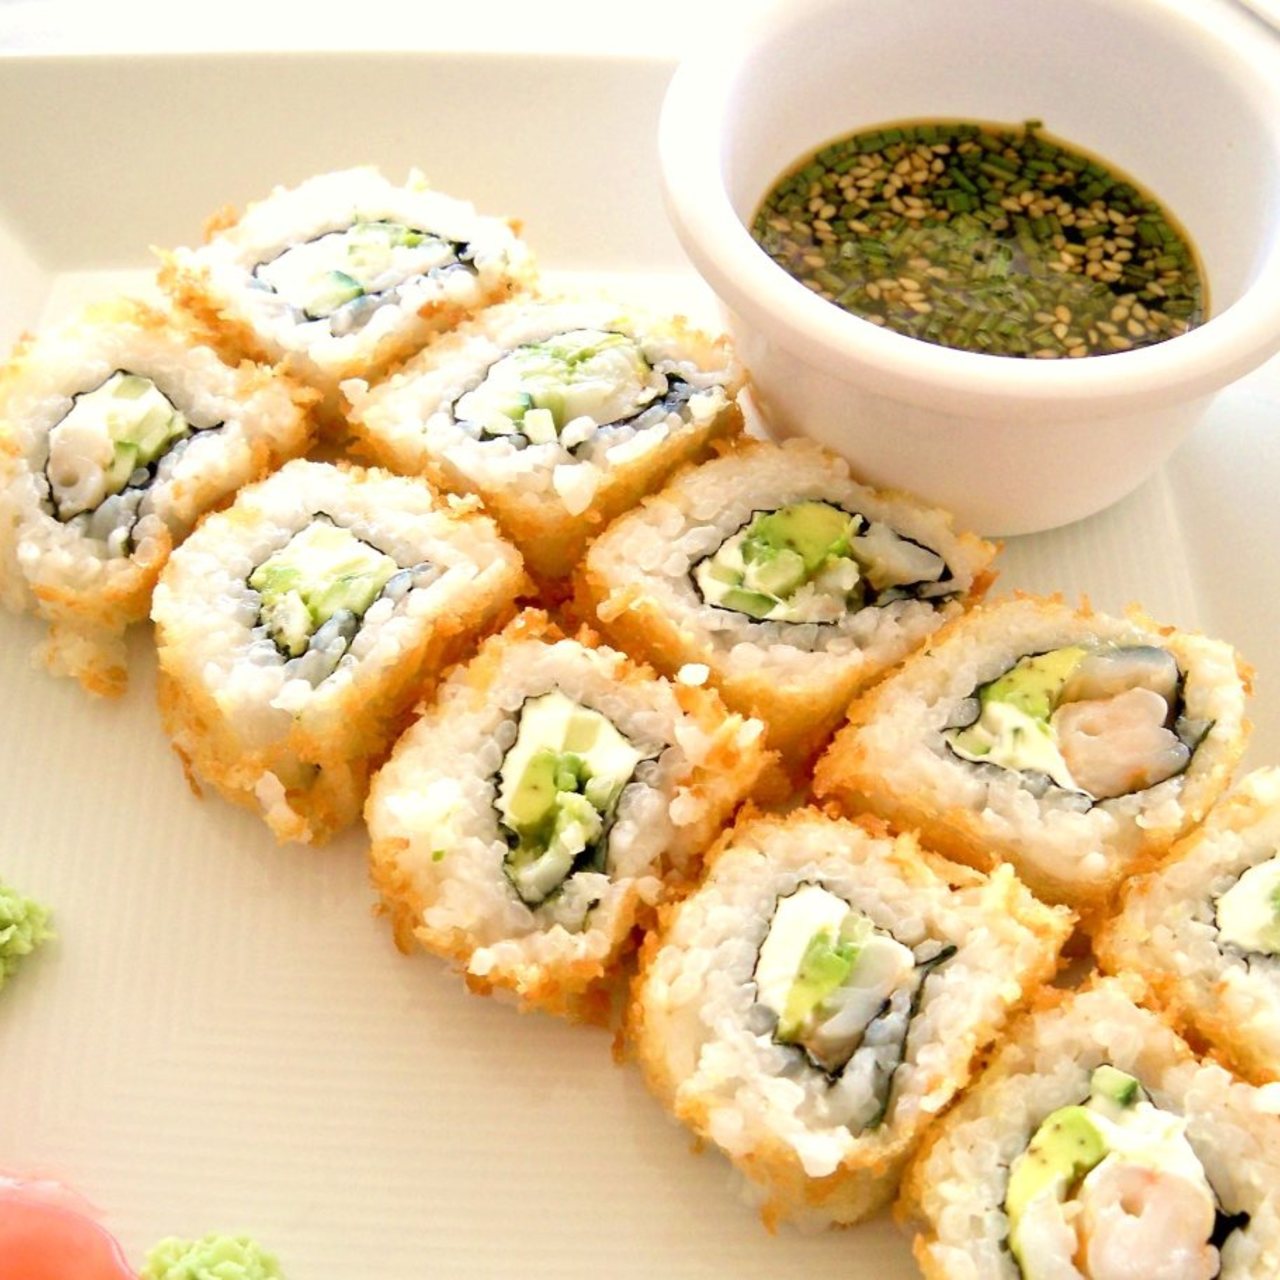 Qu'est-ce qu'on mange aujourd'hui? - Page 20 Herb-crab-salad-maki-sushi-with-tem-2